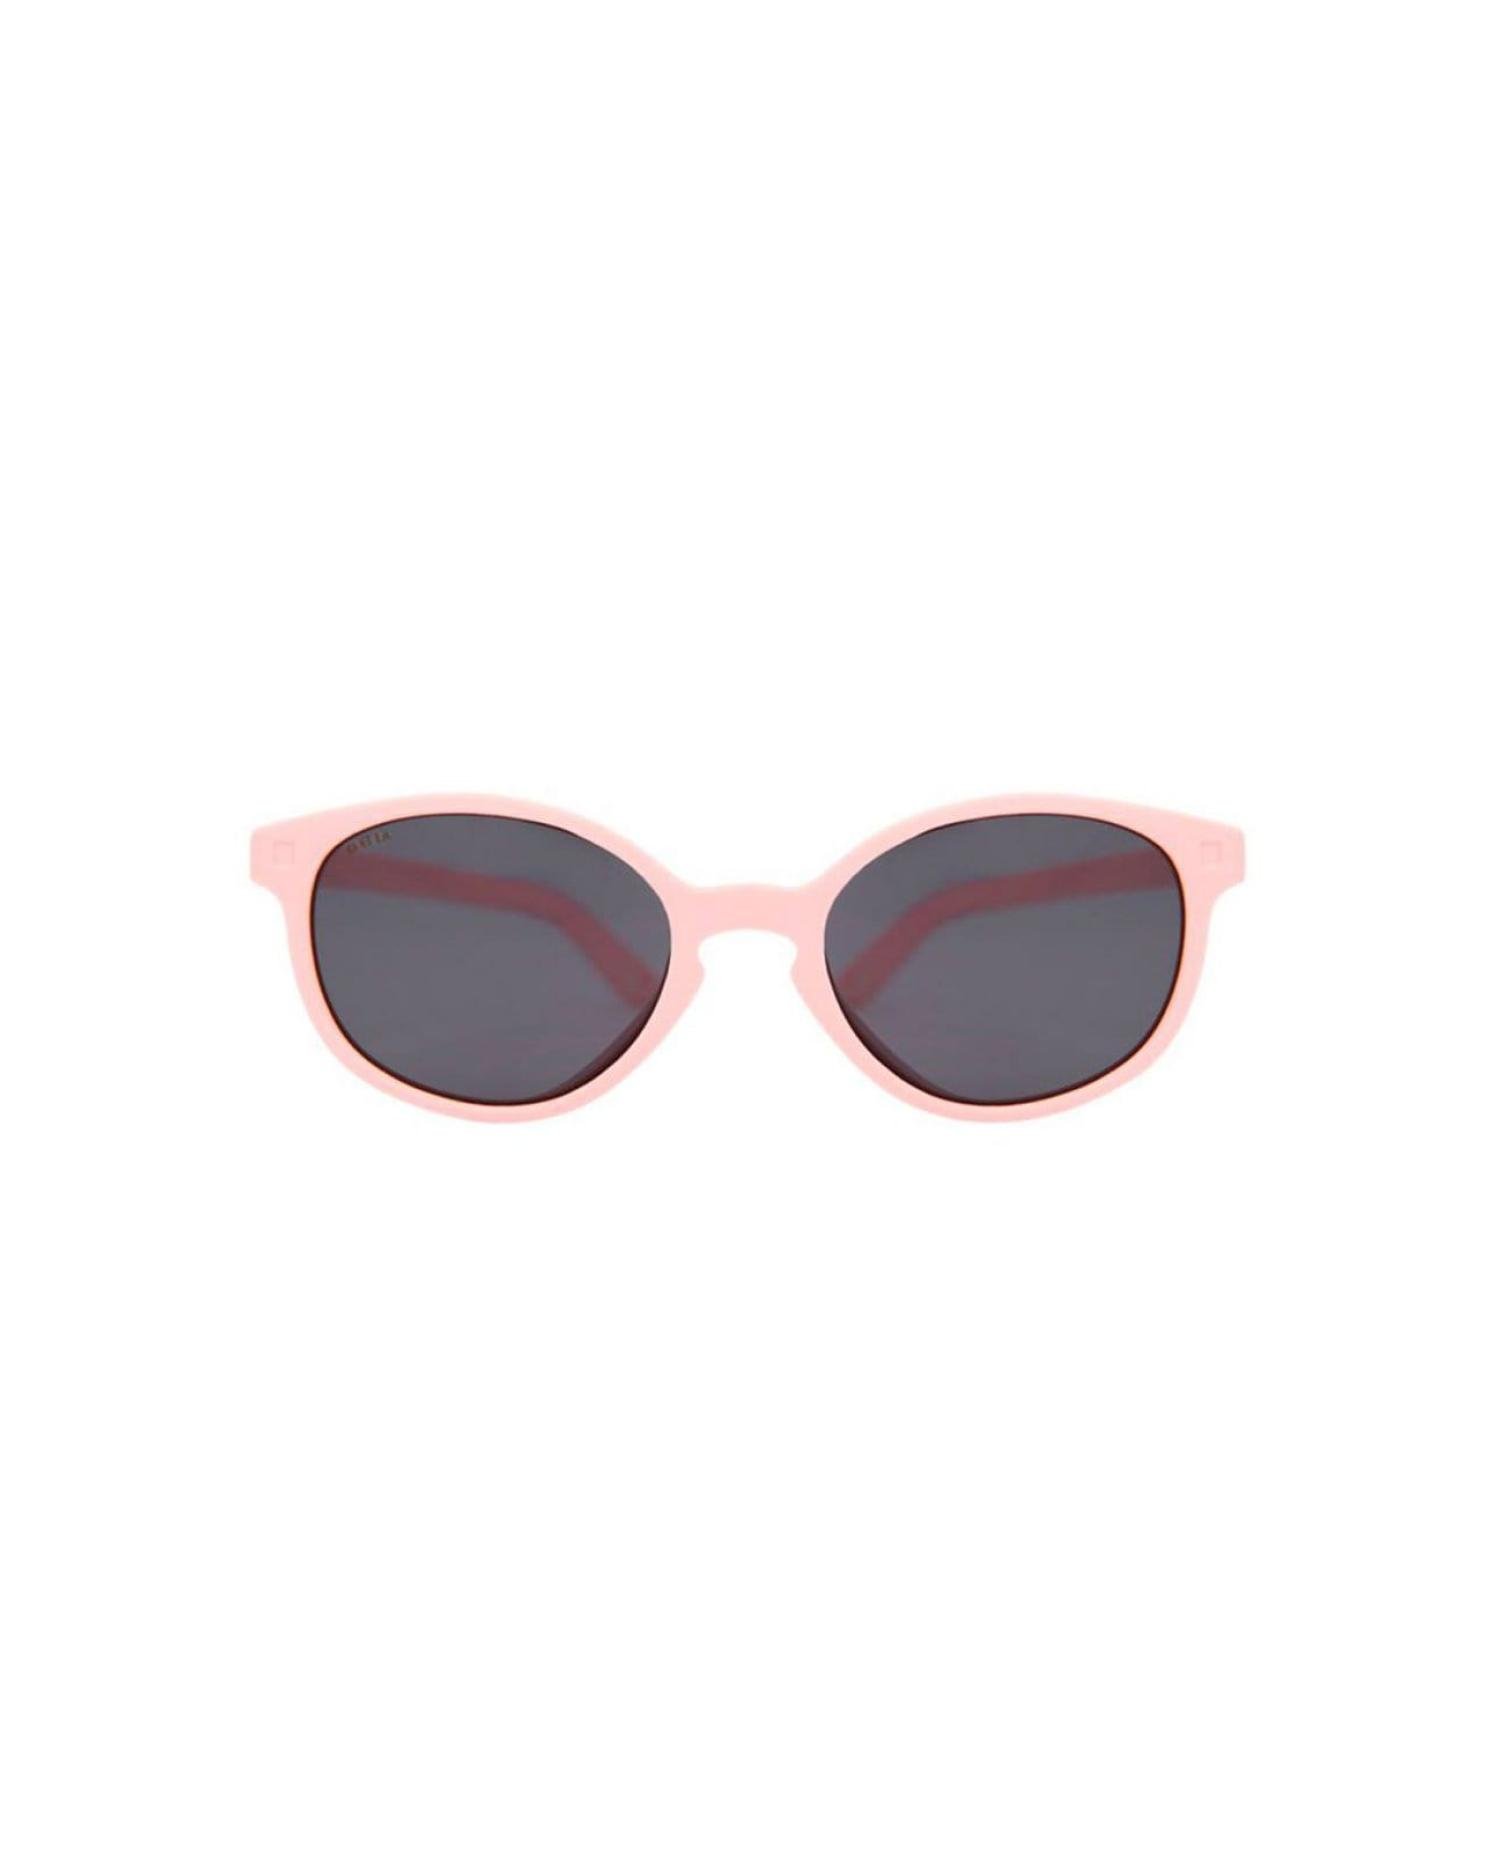 Kids Wazz sunglasses - 1-2 years by KI ET LA